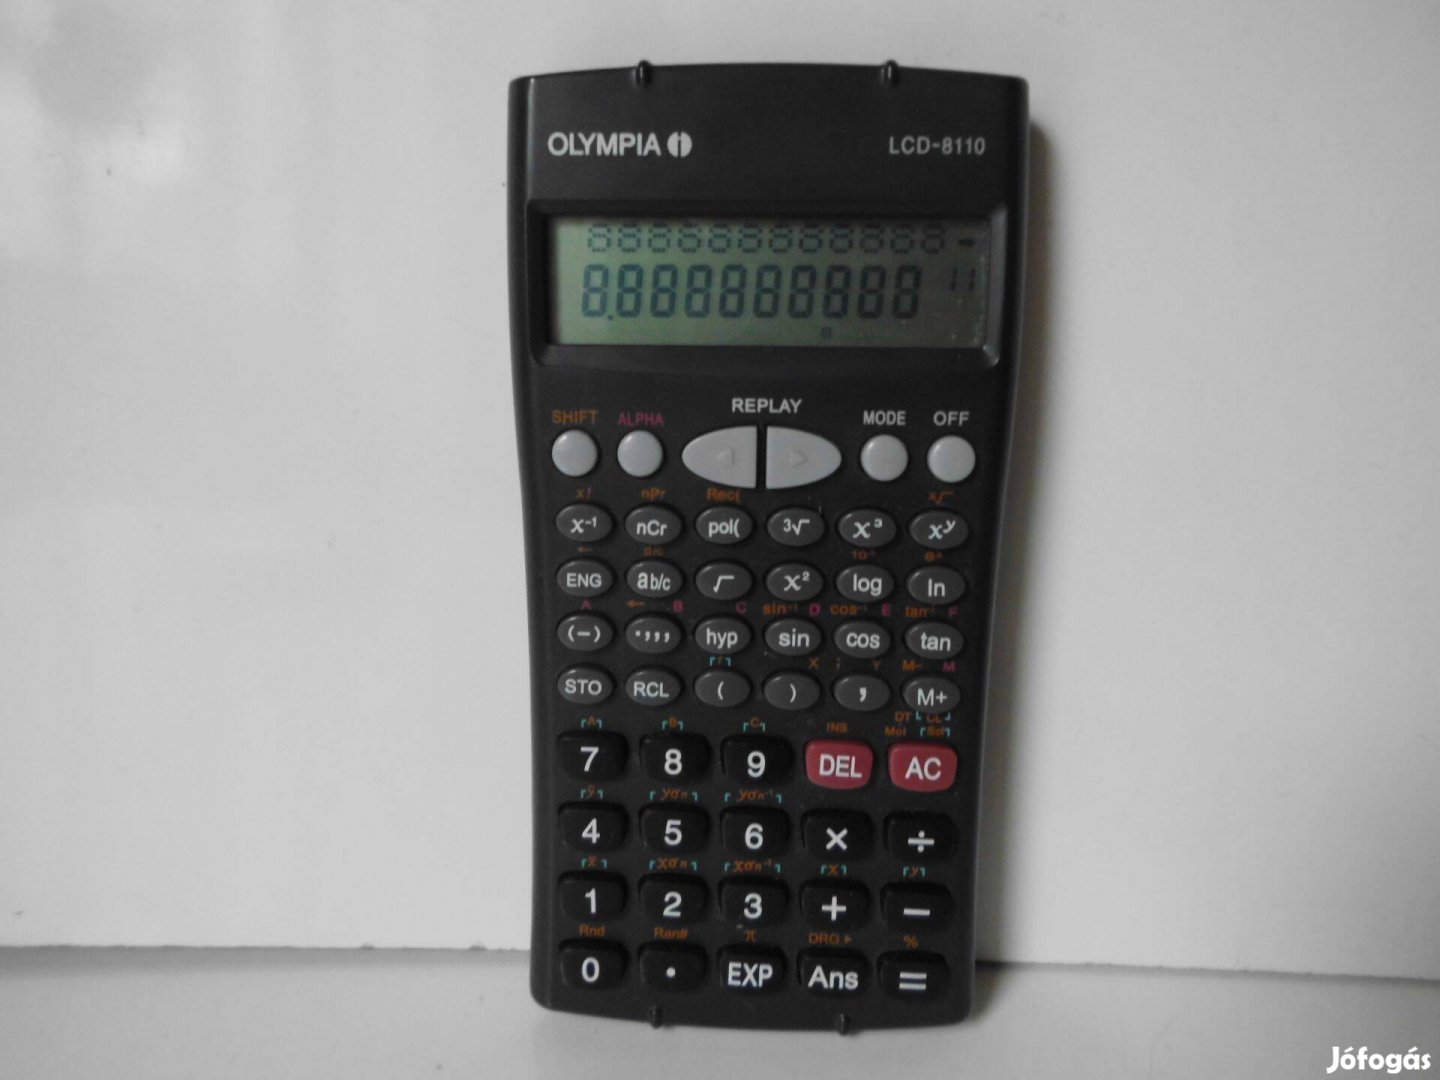 Olympia LCD-8110 tudományos számológép